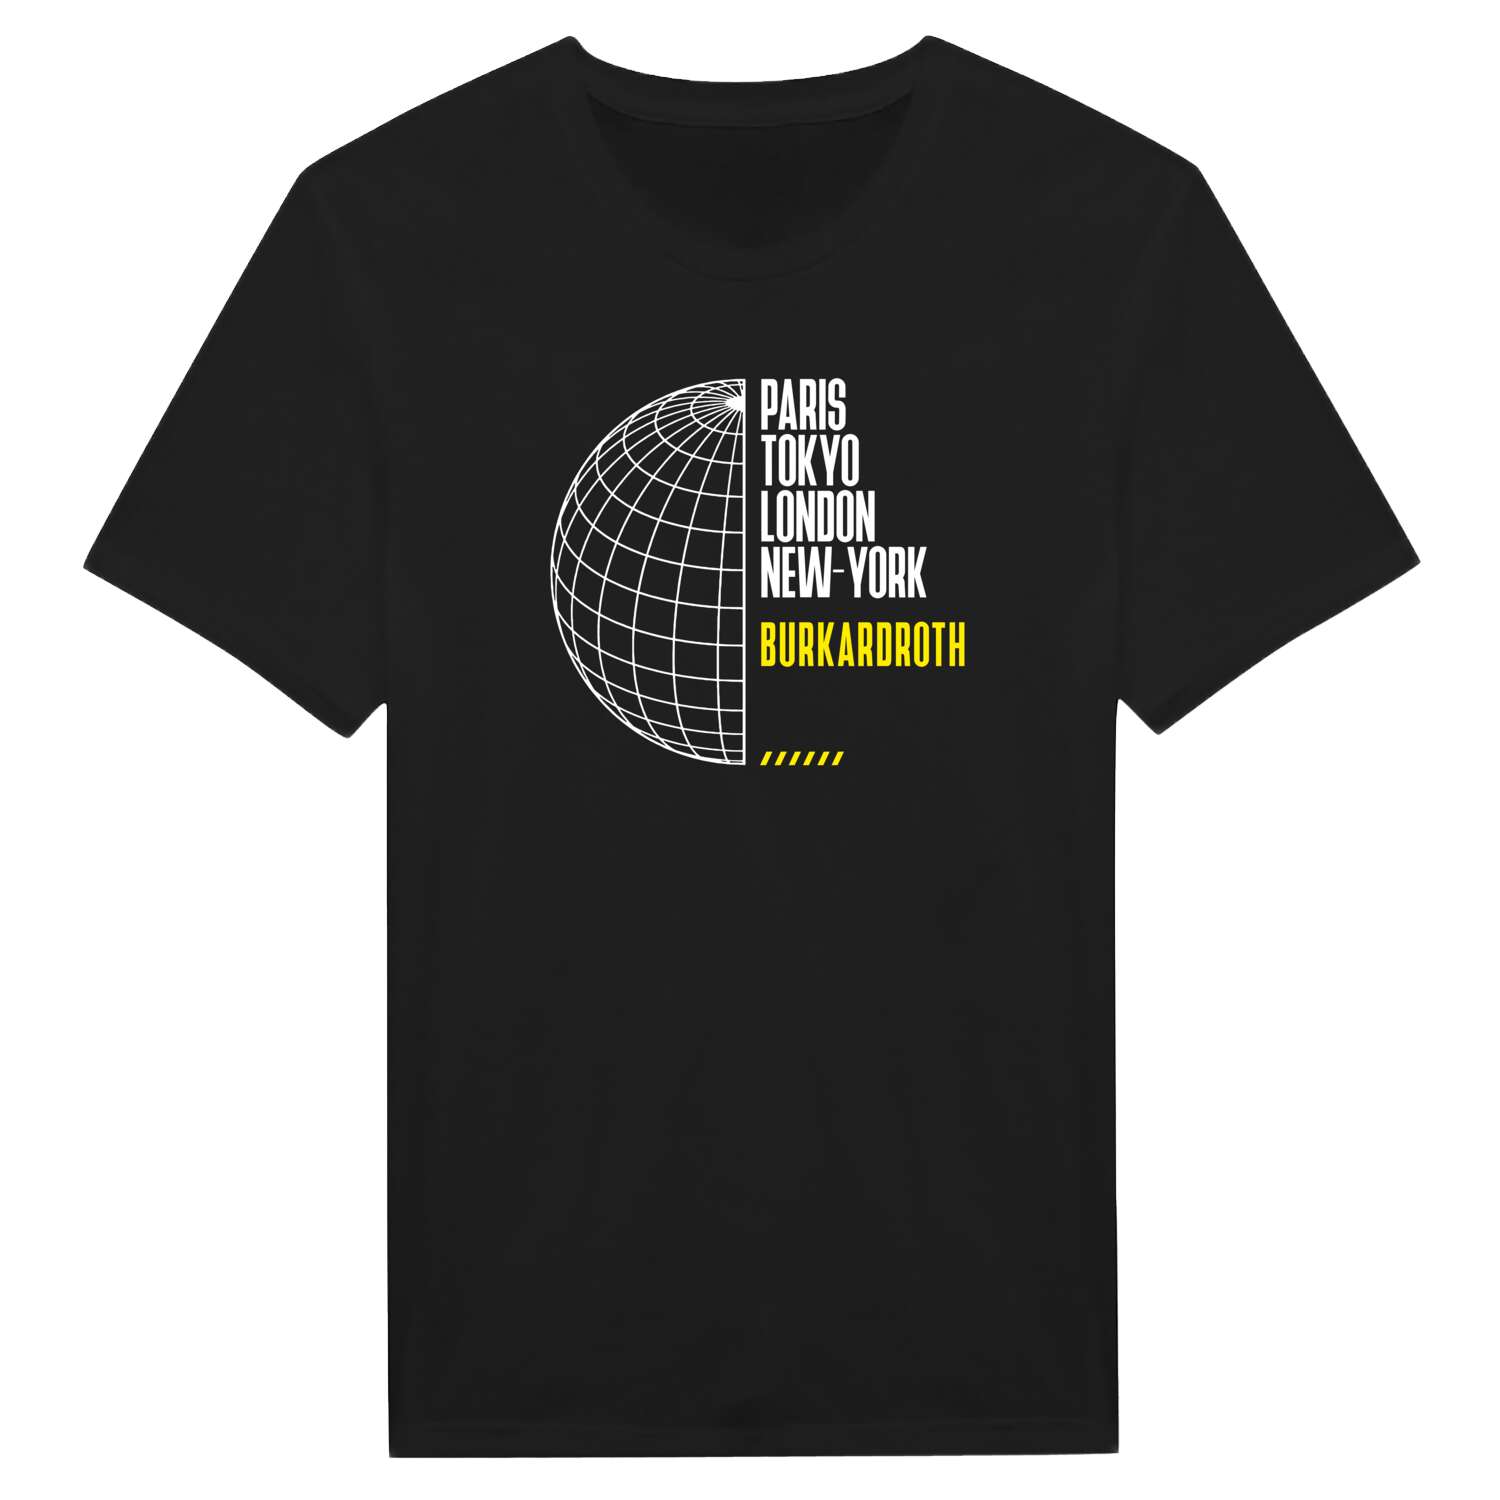 Burkardroth T-Shirt »Paris Tokyo London«